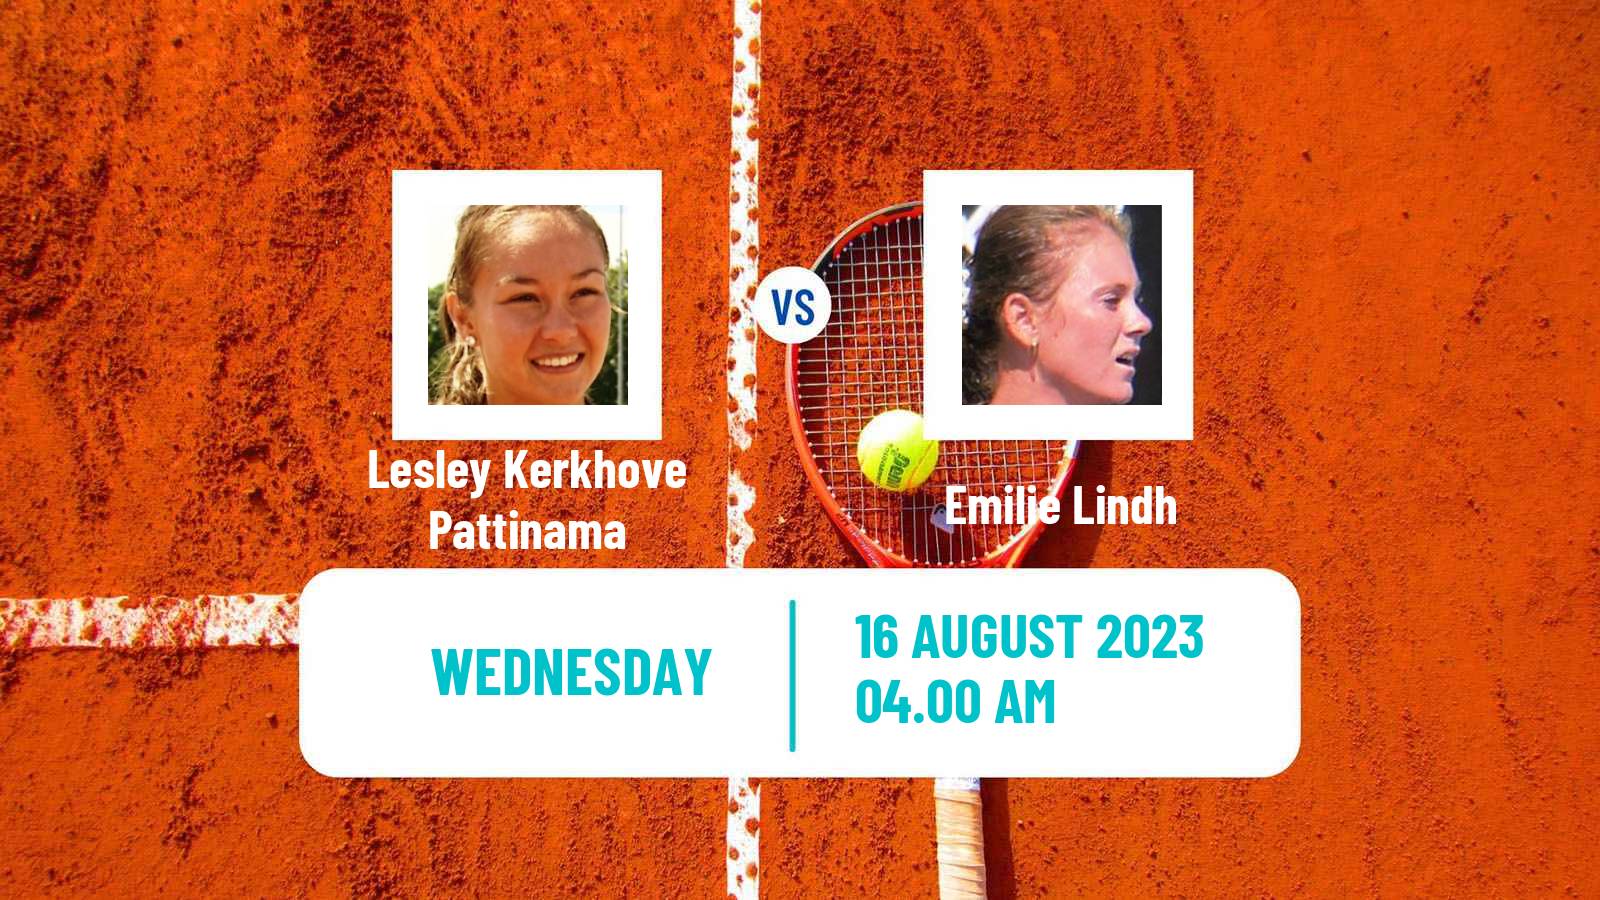 Tennis ITF W25 Ourense Women Lesley Kerkhove Pattinama - Emilie Lindh